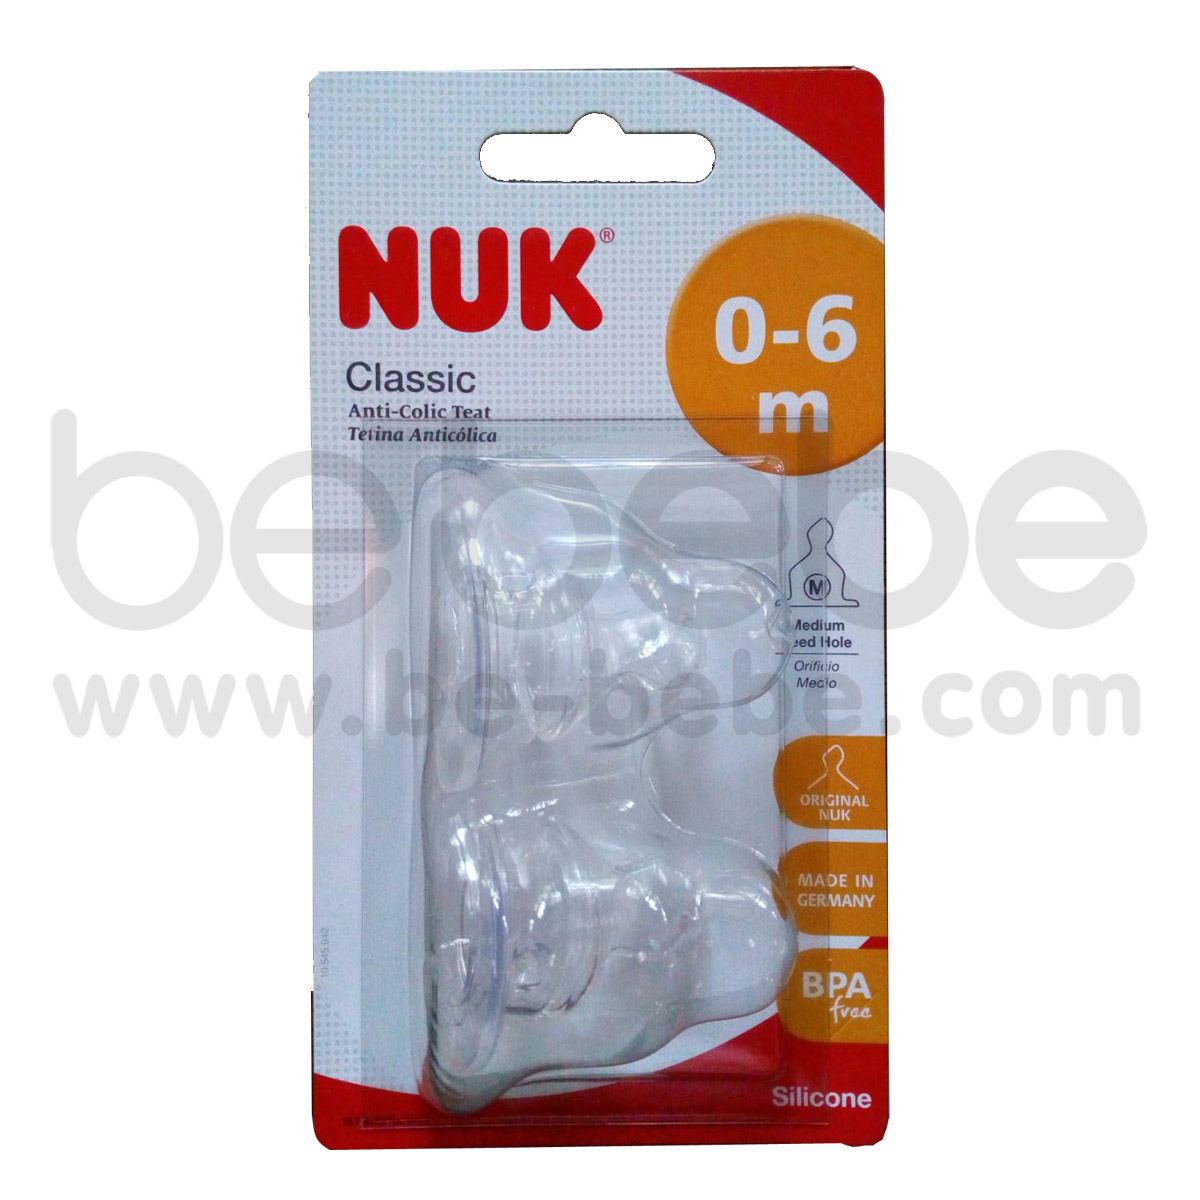 NUK:จุกนม Nuk Classic S1 (M) 0-6 m. 